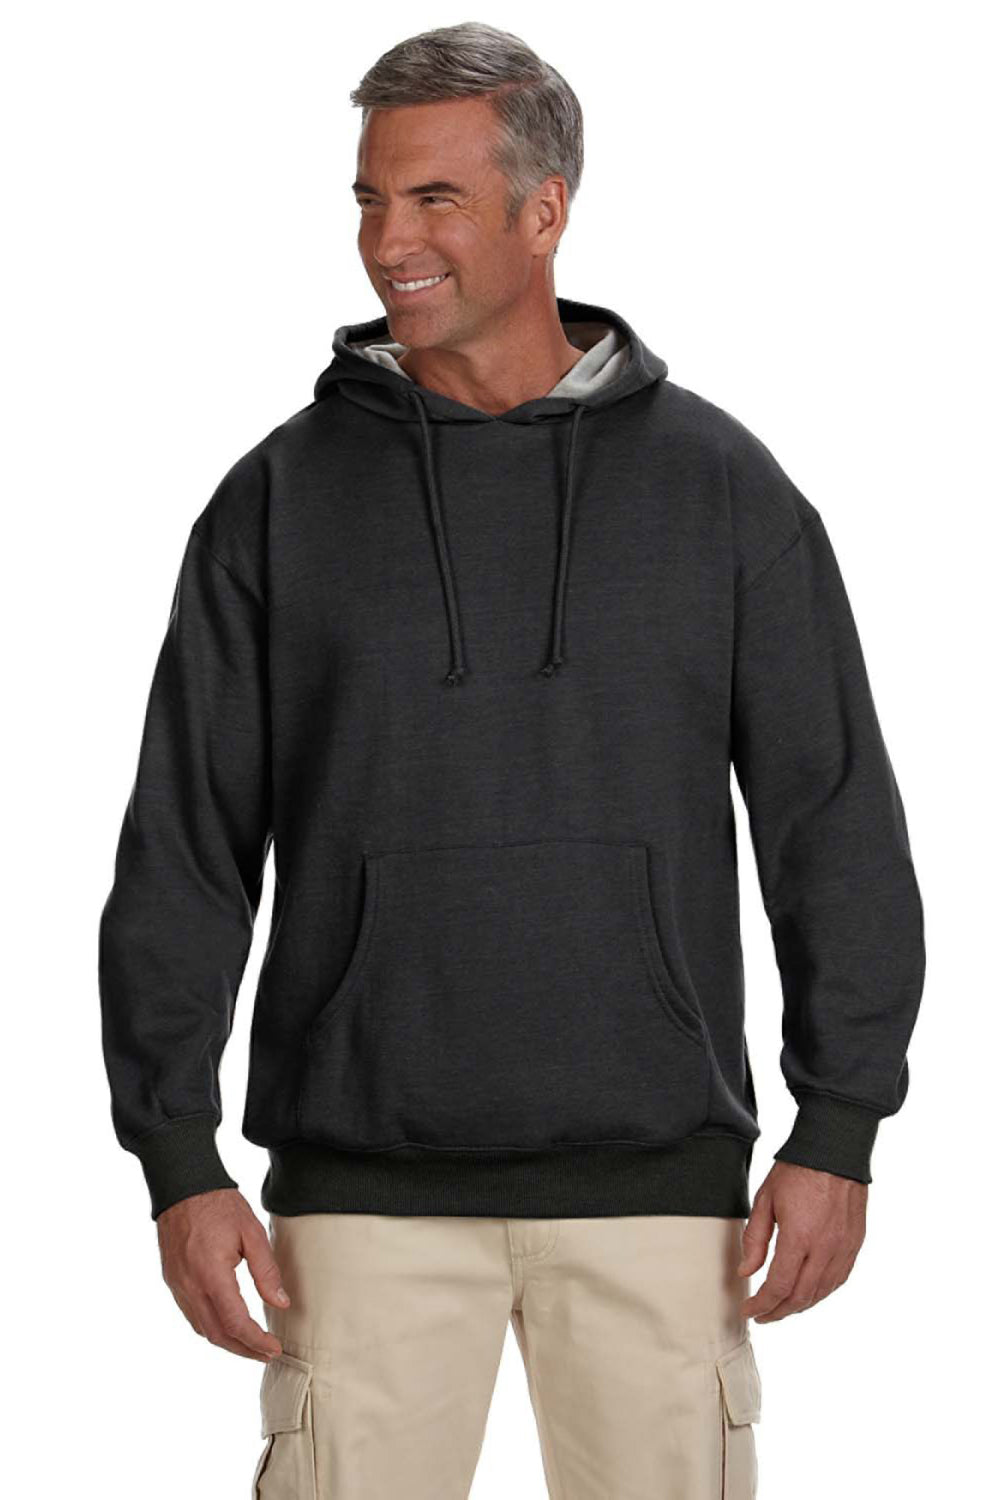 Econscious EC5570 Mens Heathered Fleece Hooded Sweatshirt Hoodie Charcoal Grey Front